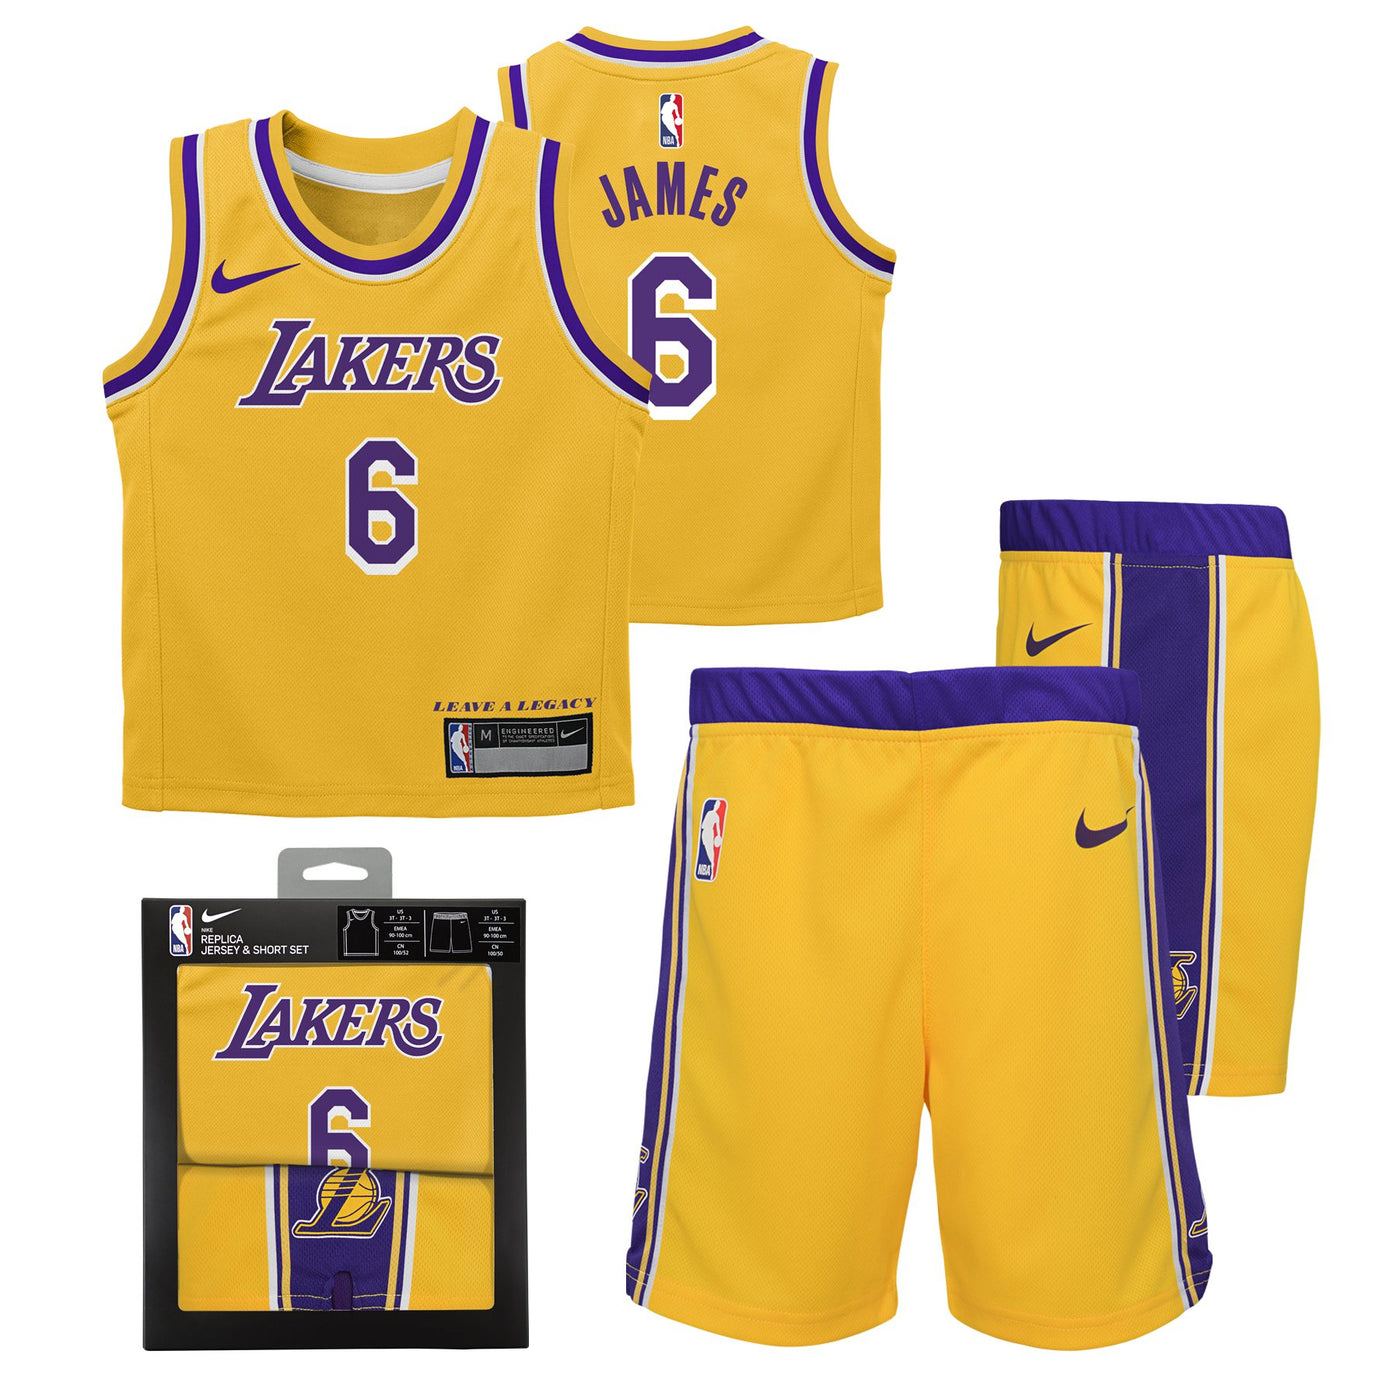 Lebron James Toddler Jersey Infant Size 12m Purple Nike NBA Los